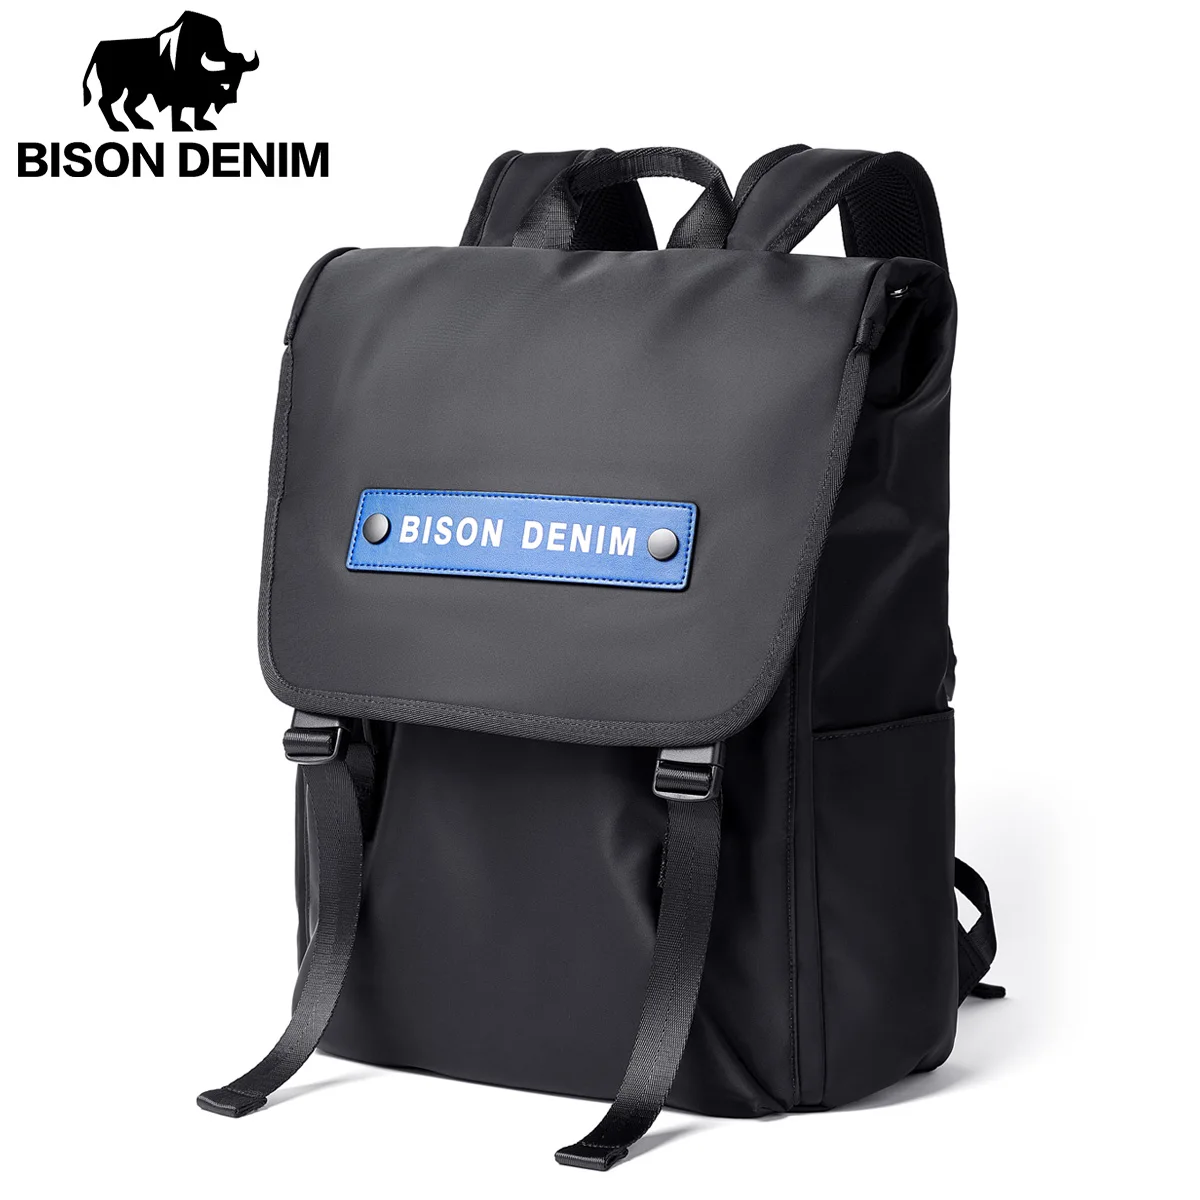 

BISONDENIM New Waterproof Oxford Cloth Women Backpack Designer Light Travel Backpack Fashion School Bags Casual Shoulder Bags